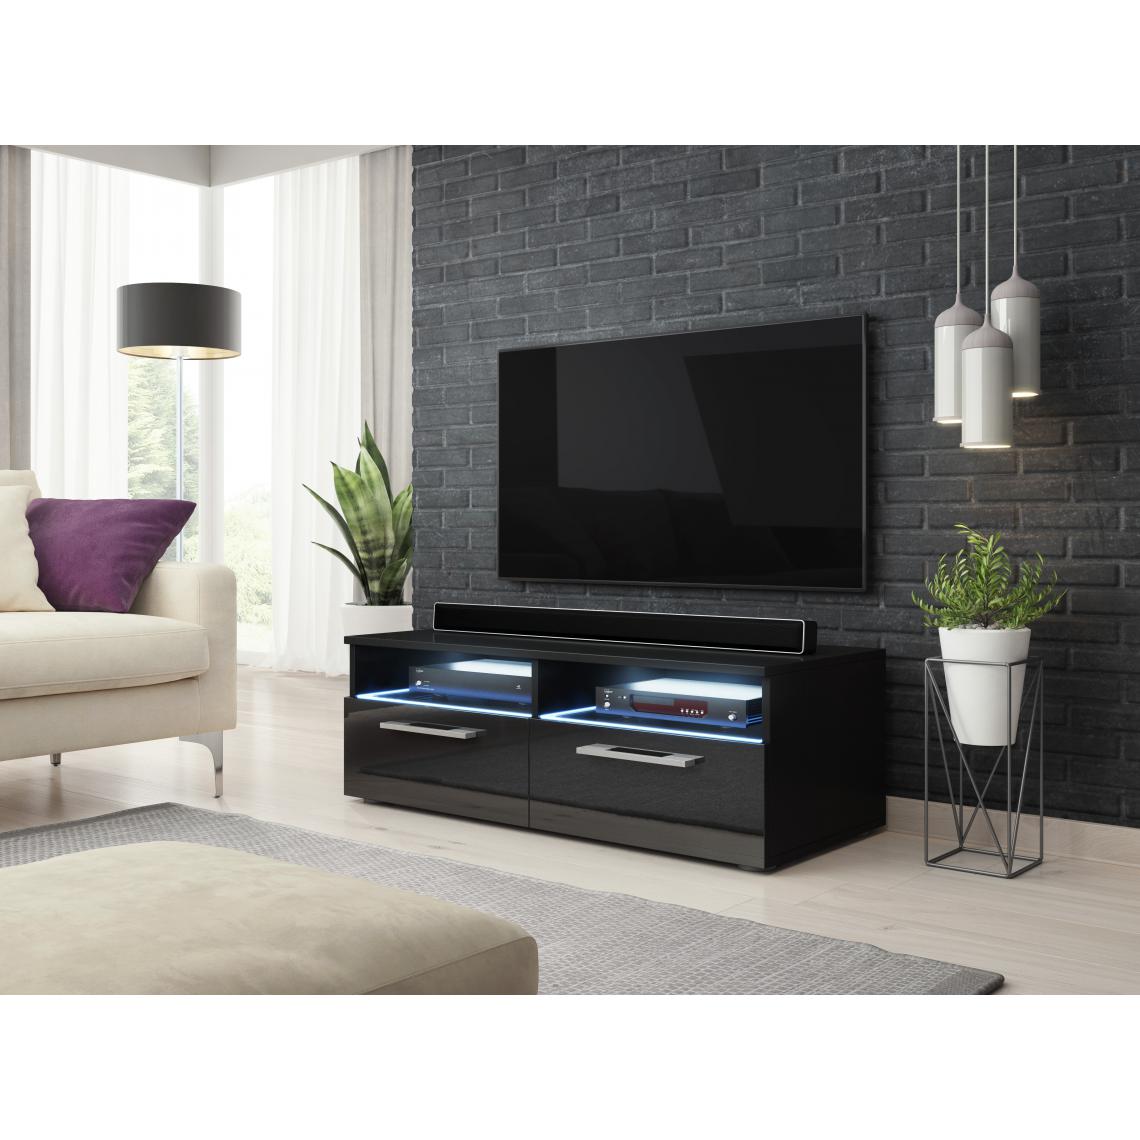 3xeliving - Classic Zumbi meuble TV noir / noir brillant 100cm LED - Meubles TV, Hi-Fi